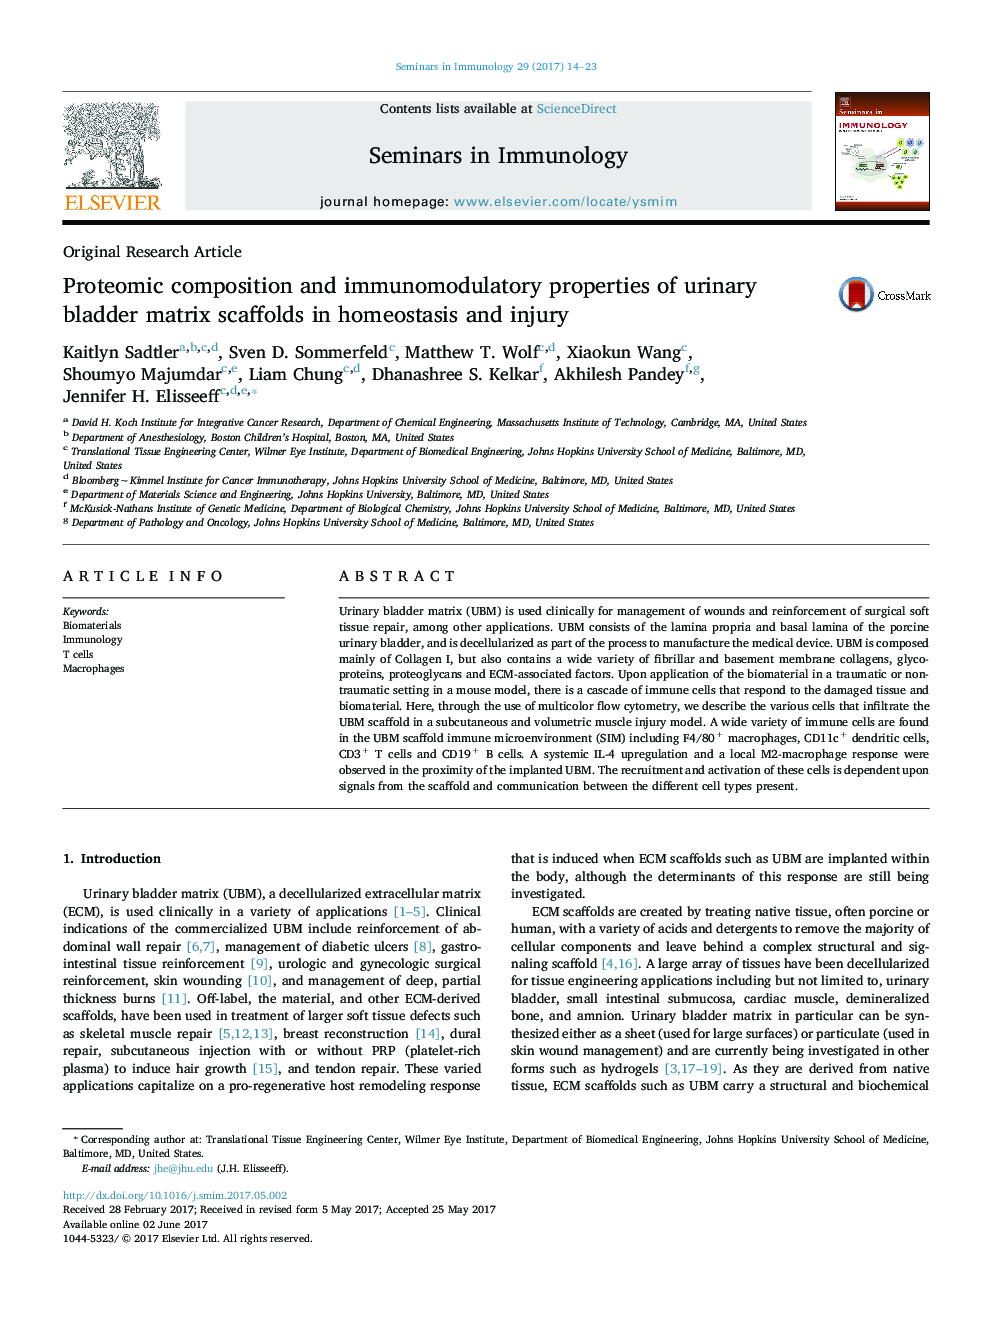 Proteomic composition and immunomodulatory properties of urinary bladder matrix scaffolds in homeostasis and injury